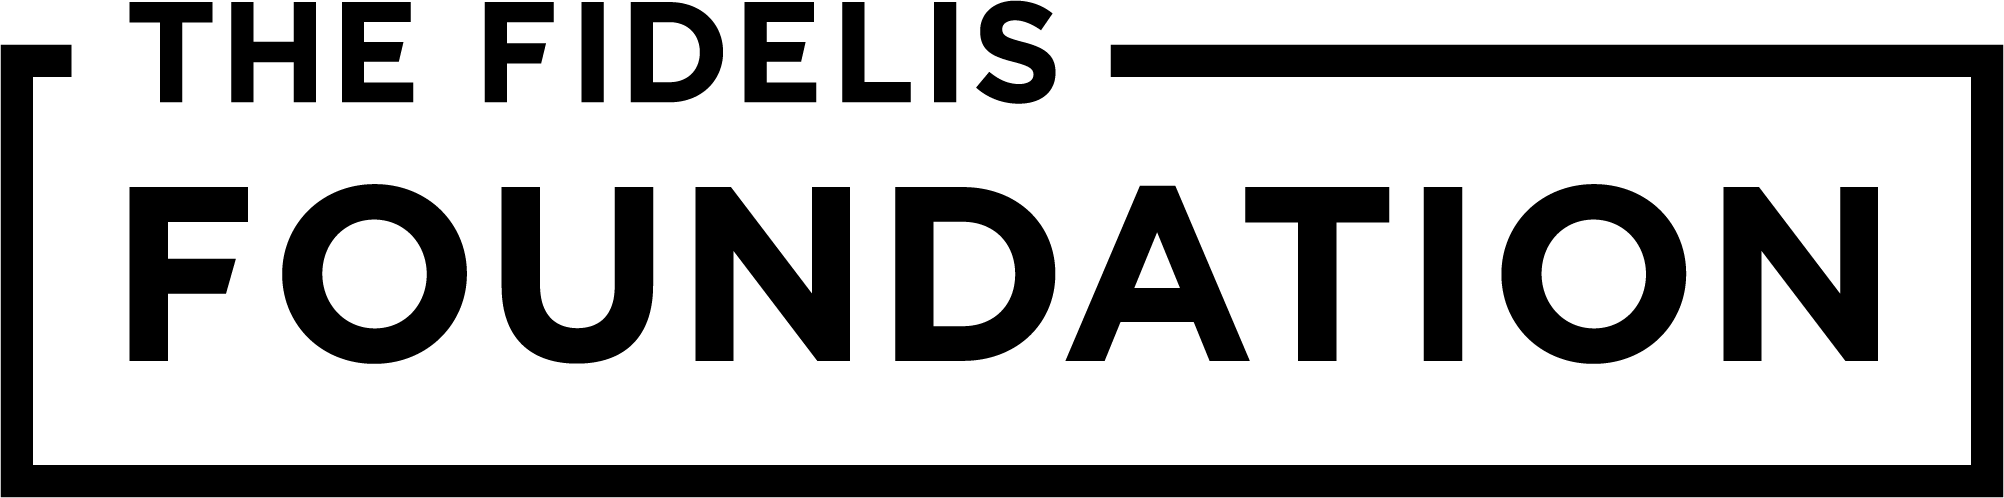 The fidelis foundation logo